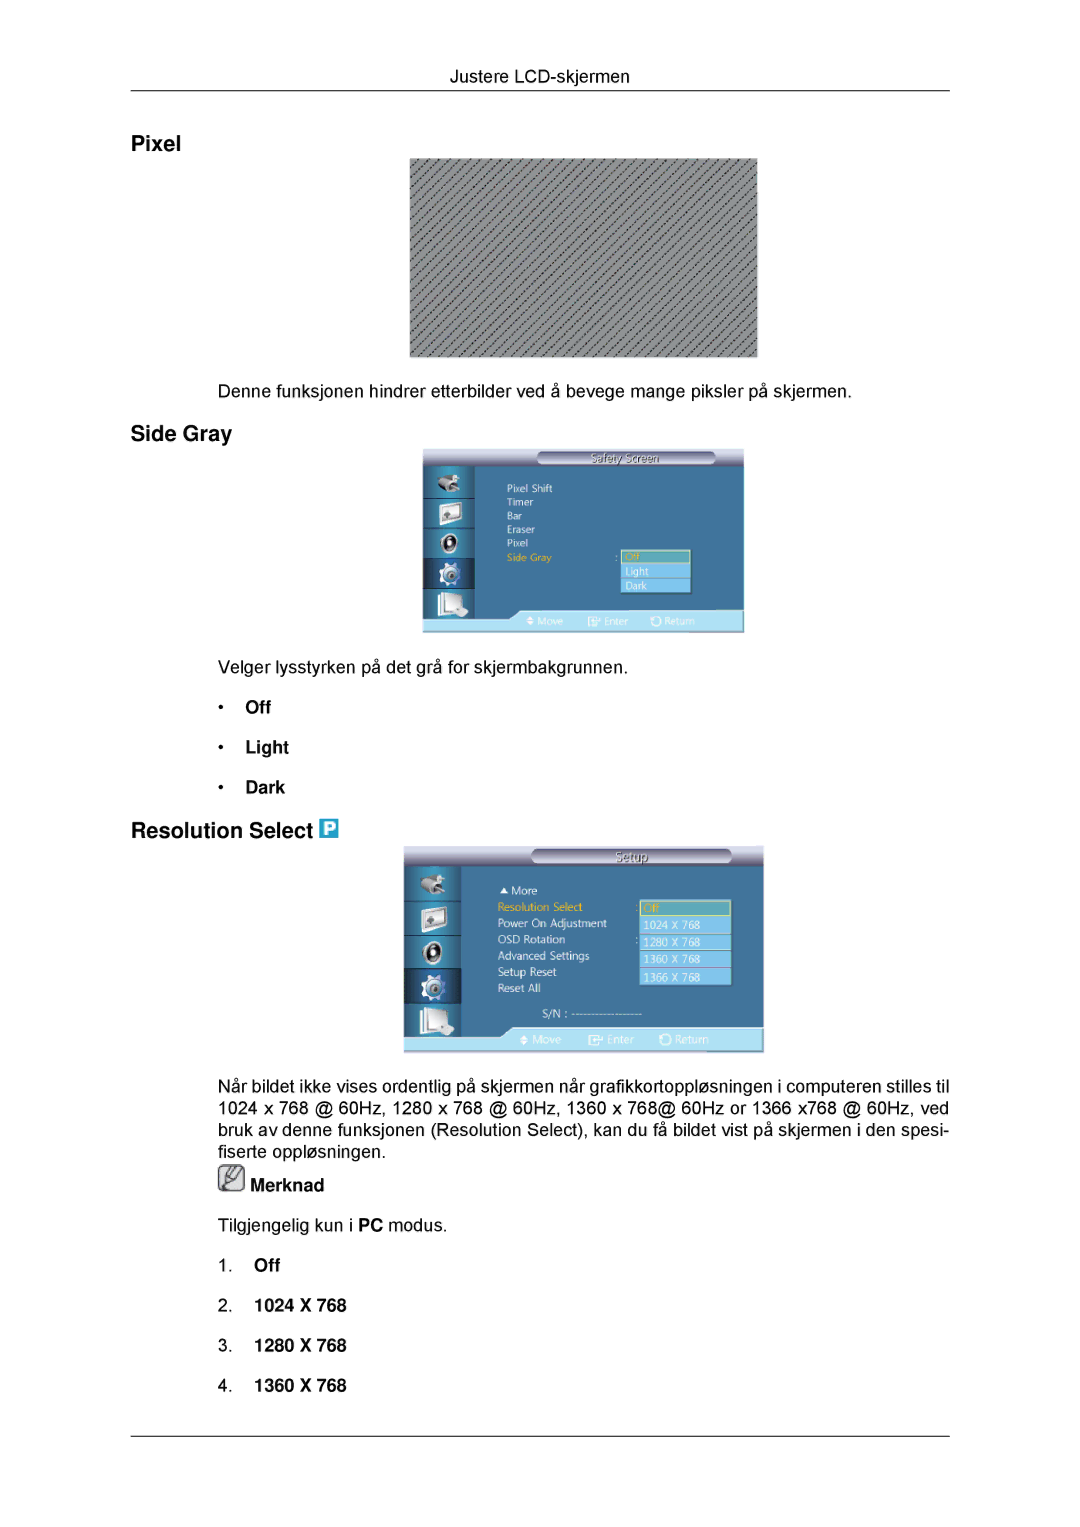 Samsung LH70CSBPLBC/EN manual Pixel, Side Gray, Resolution Select, Off Light Dark, Off 1024 X 1280 X 1360 X 